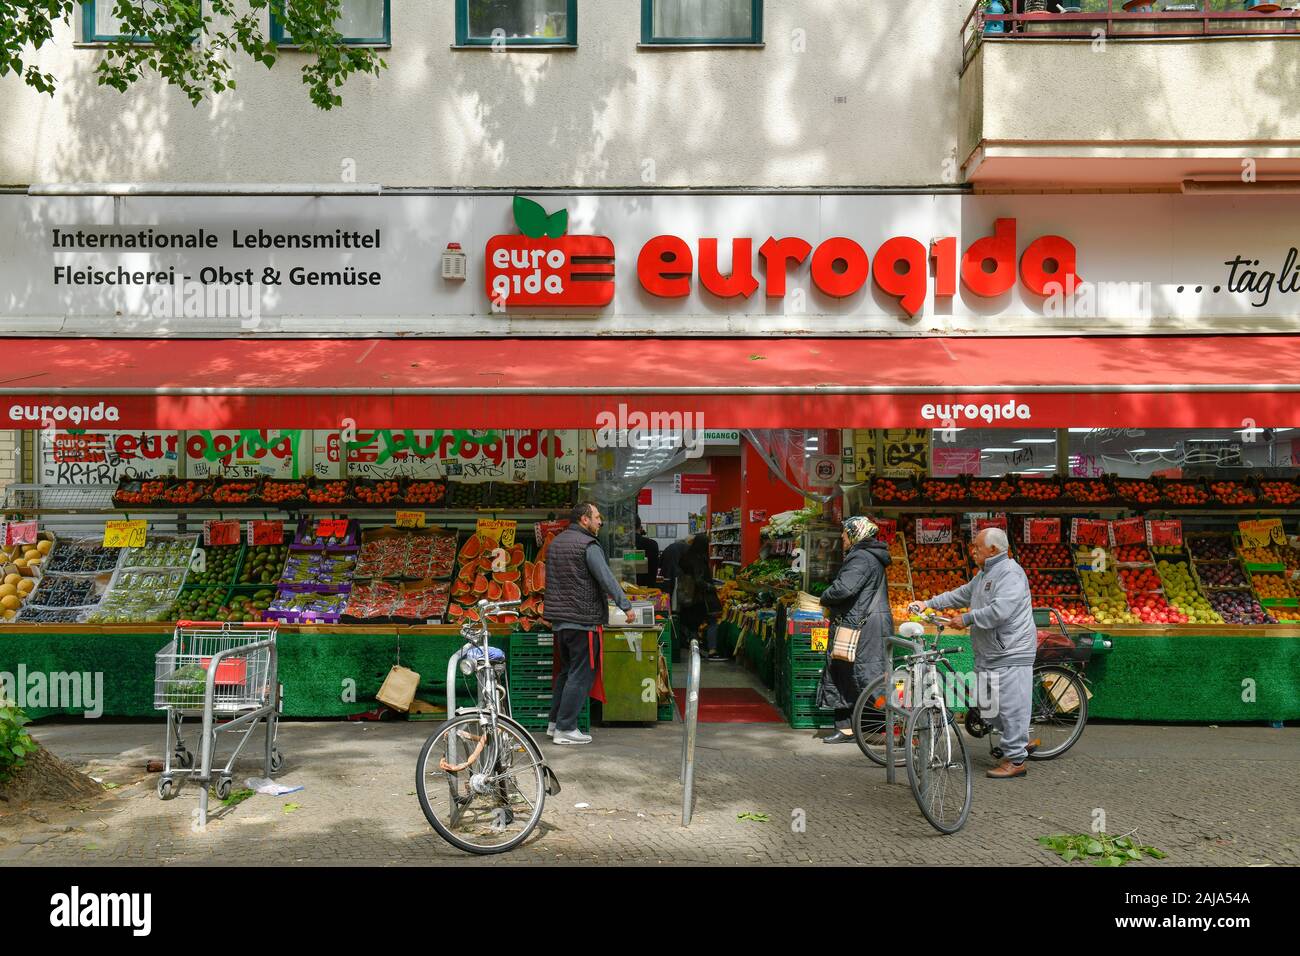 Türkischer Supermark Eurogida, Wrangelstraße, Kreuzberg, Berlin, Deutschland Stock Photo